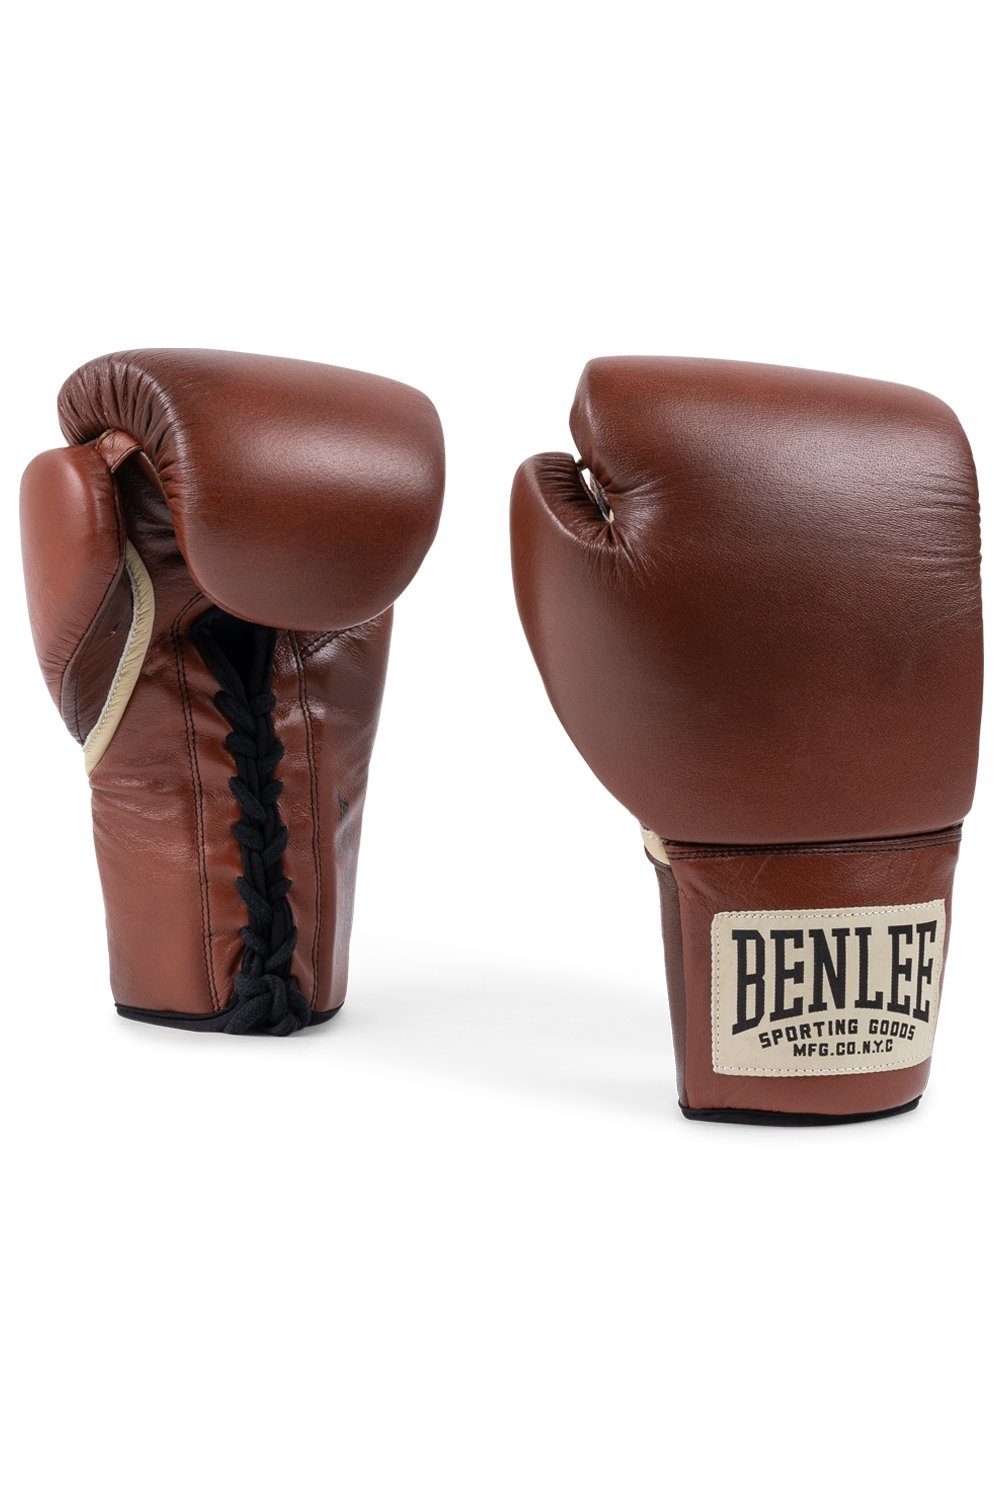 Benlee Rocky Marciano Boxhandschuhe PREMIUM CONTEST